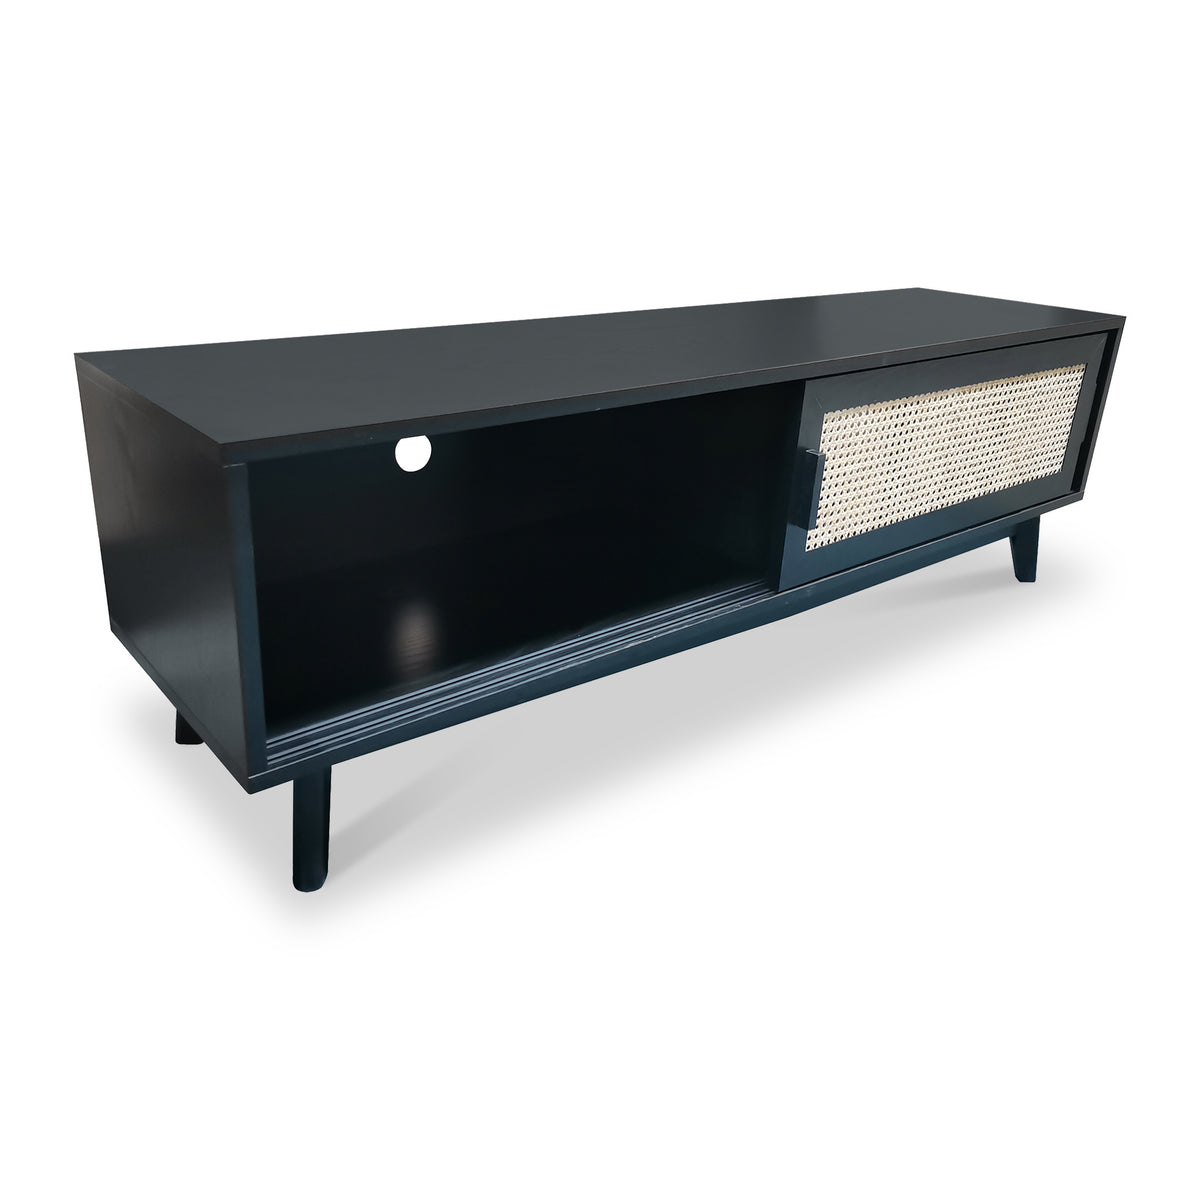 Lennox 150cm Black TV Stand from Roseland Furniture